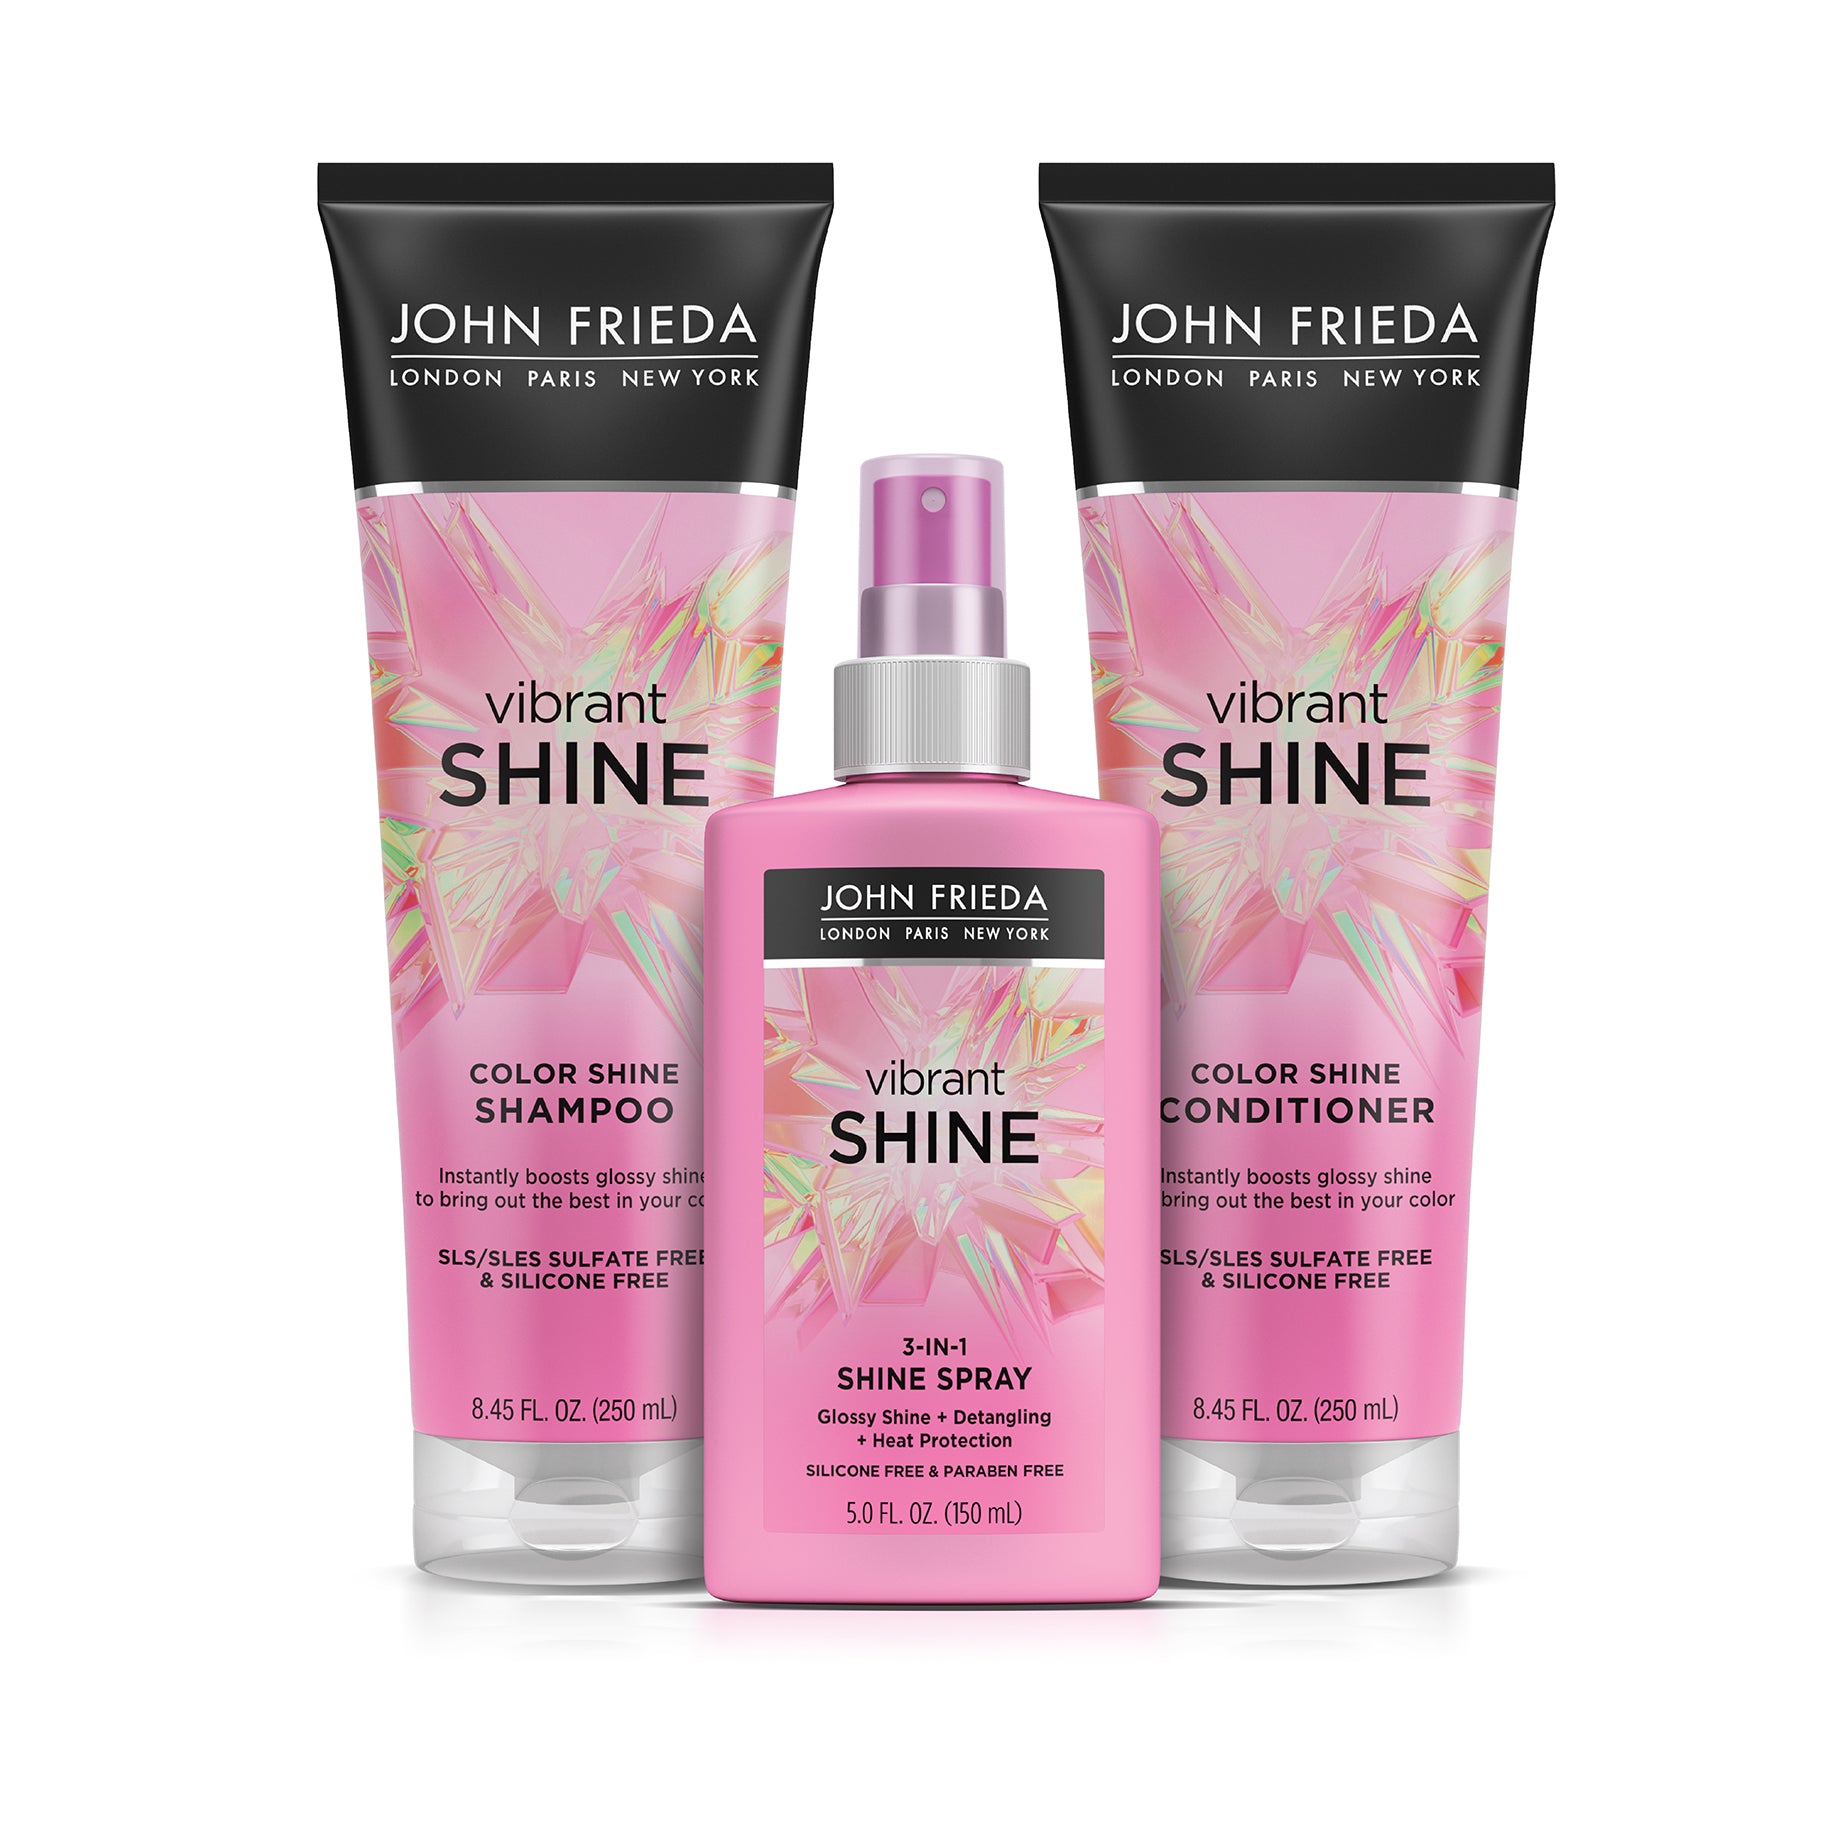 John Frieda Vibrant Shine Color Shine Shampoo and Conditioner and 3-in-1 Shine Spray.